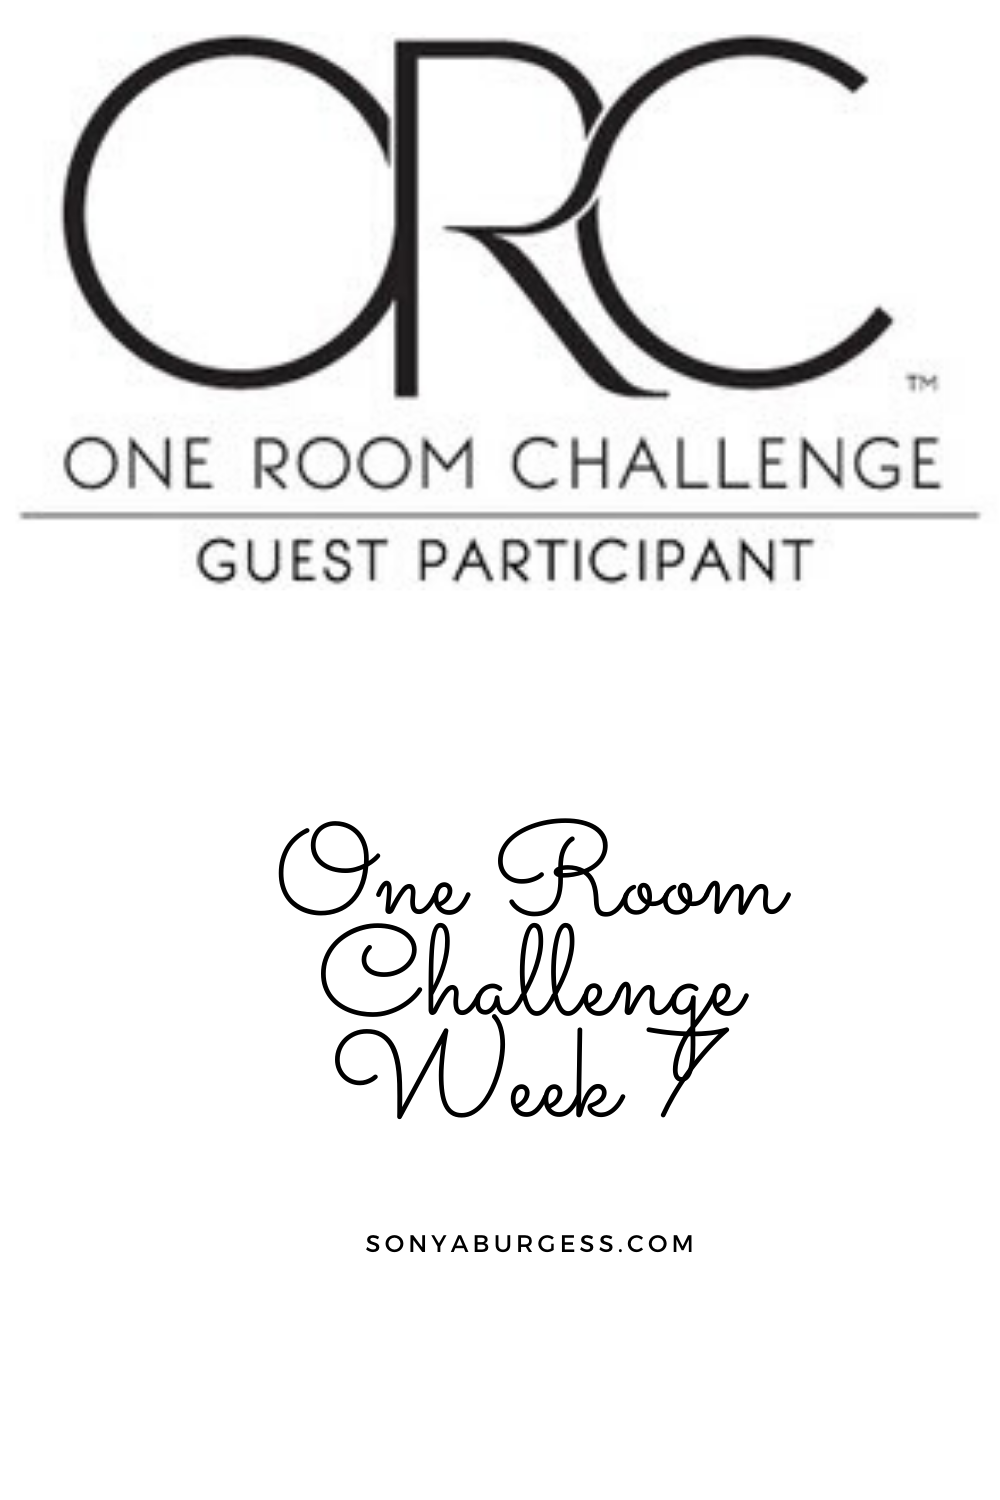 One Room Challenge Week 7